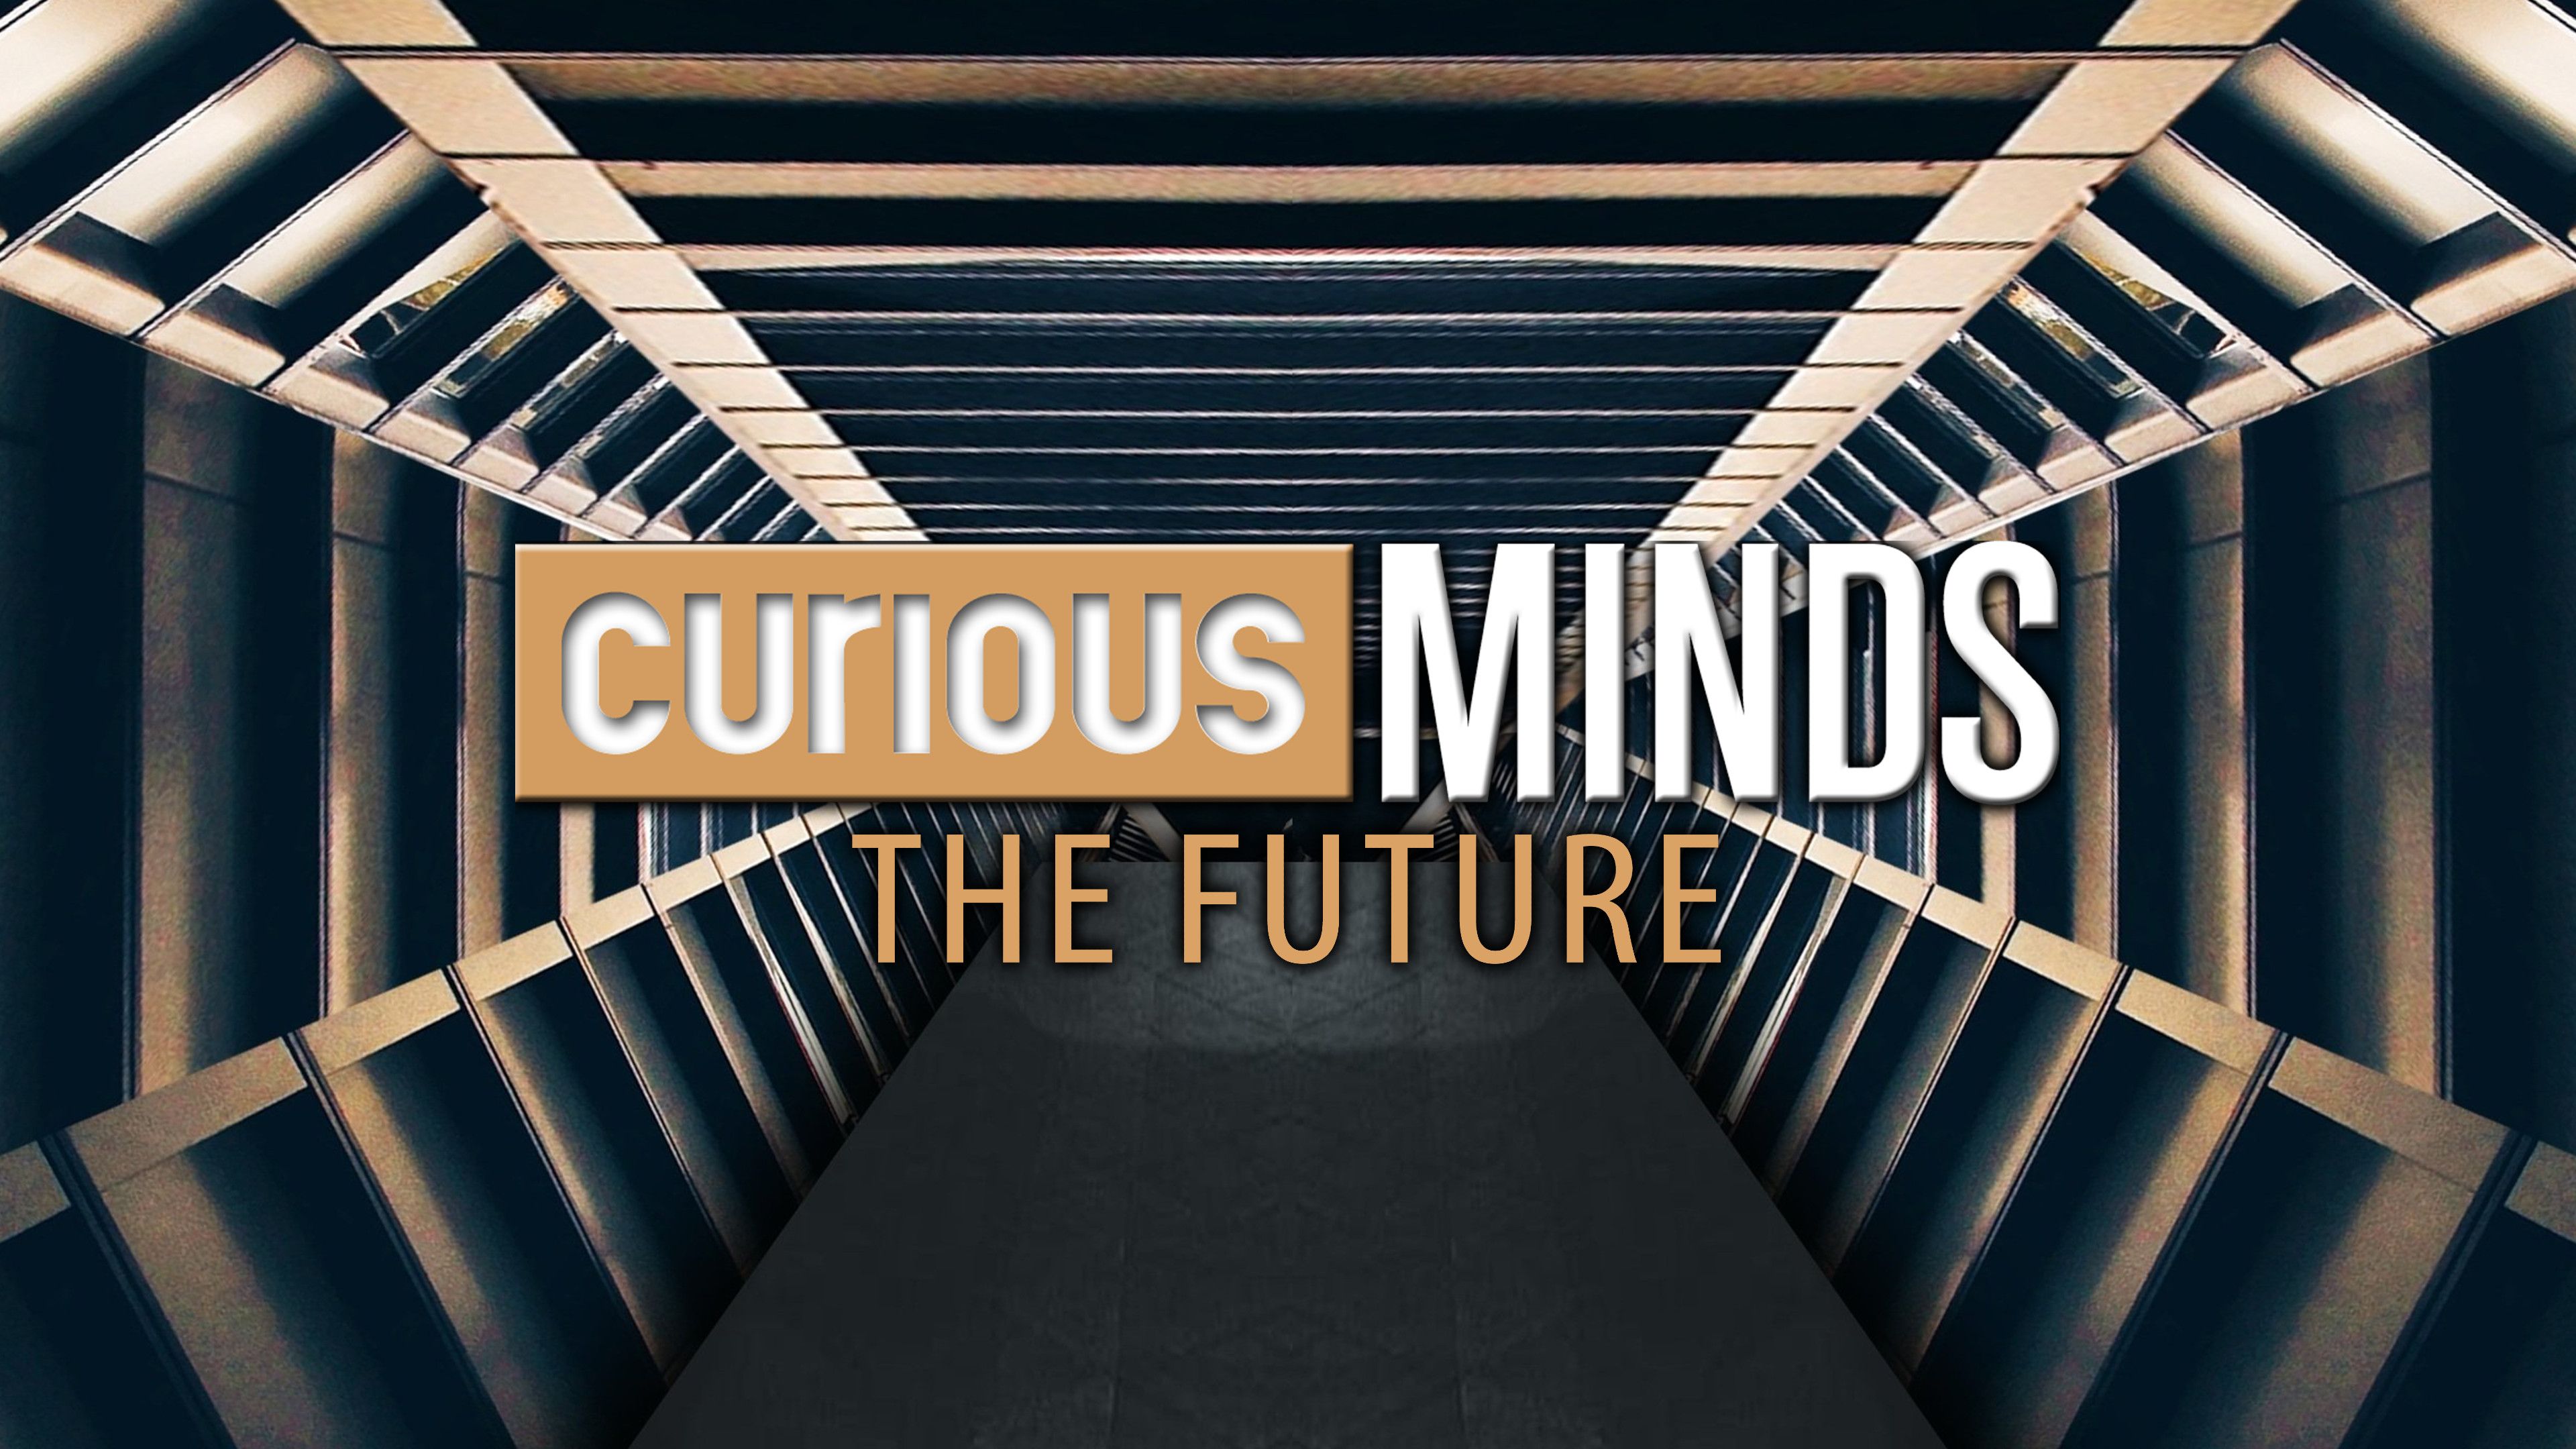 Curious Minds: The Future